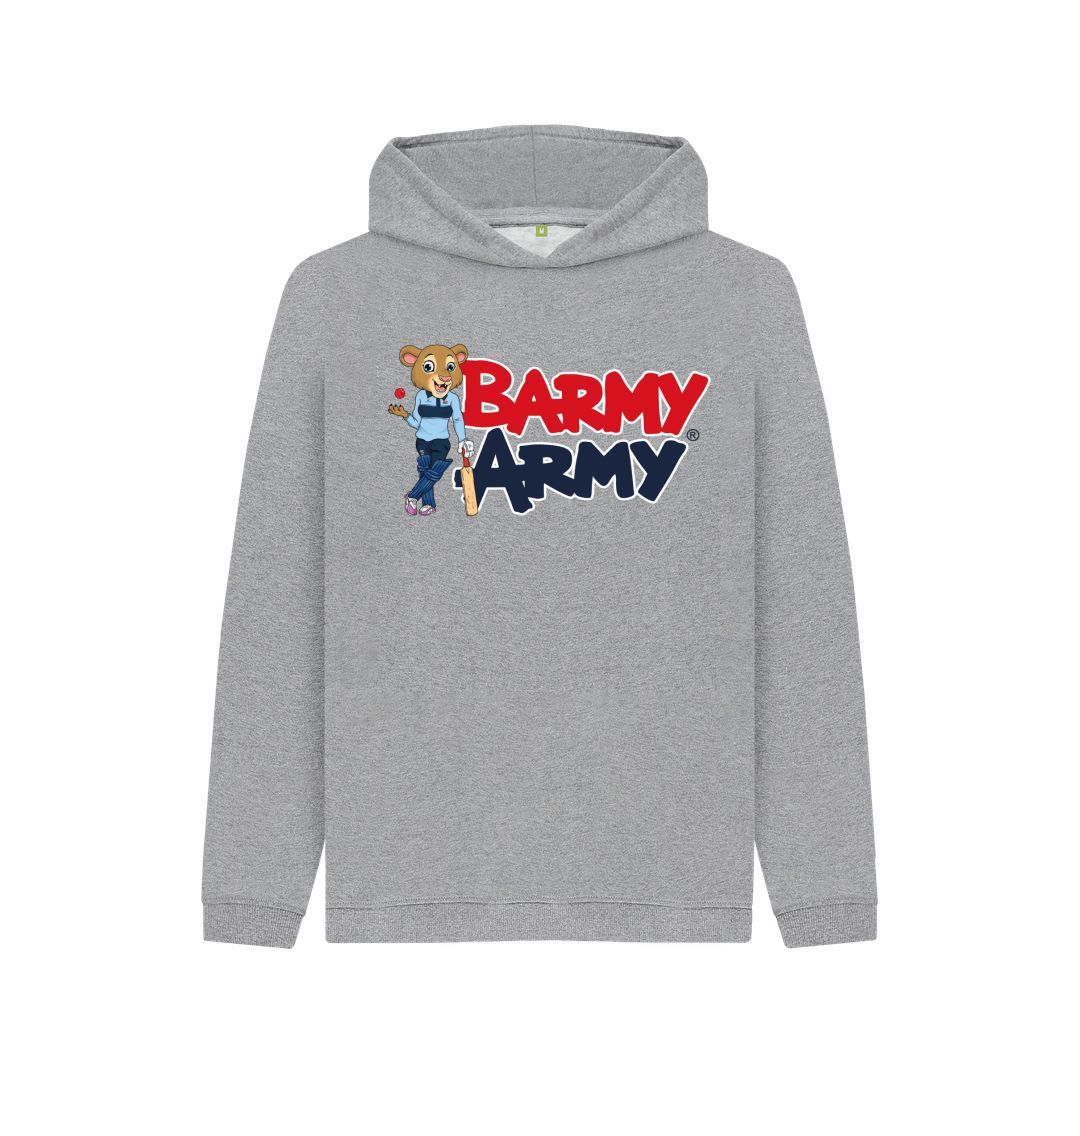 Athletic Grey Barmy Army Mascot Pose Hoody - Junior